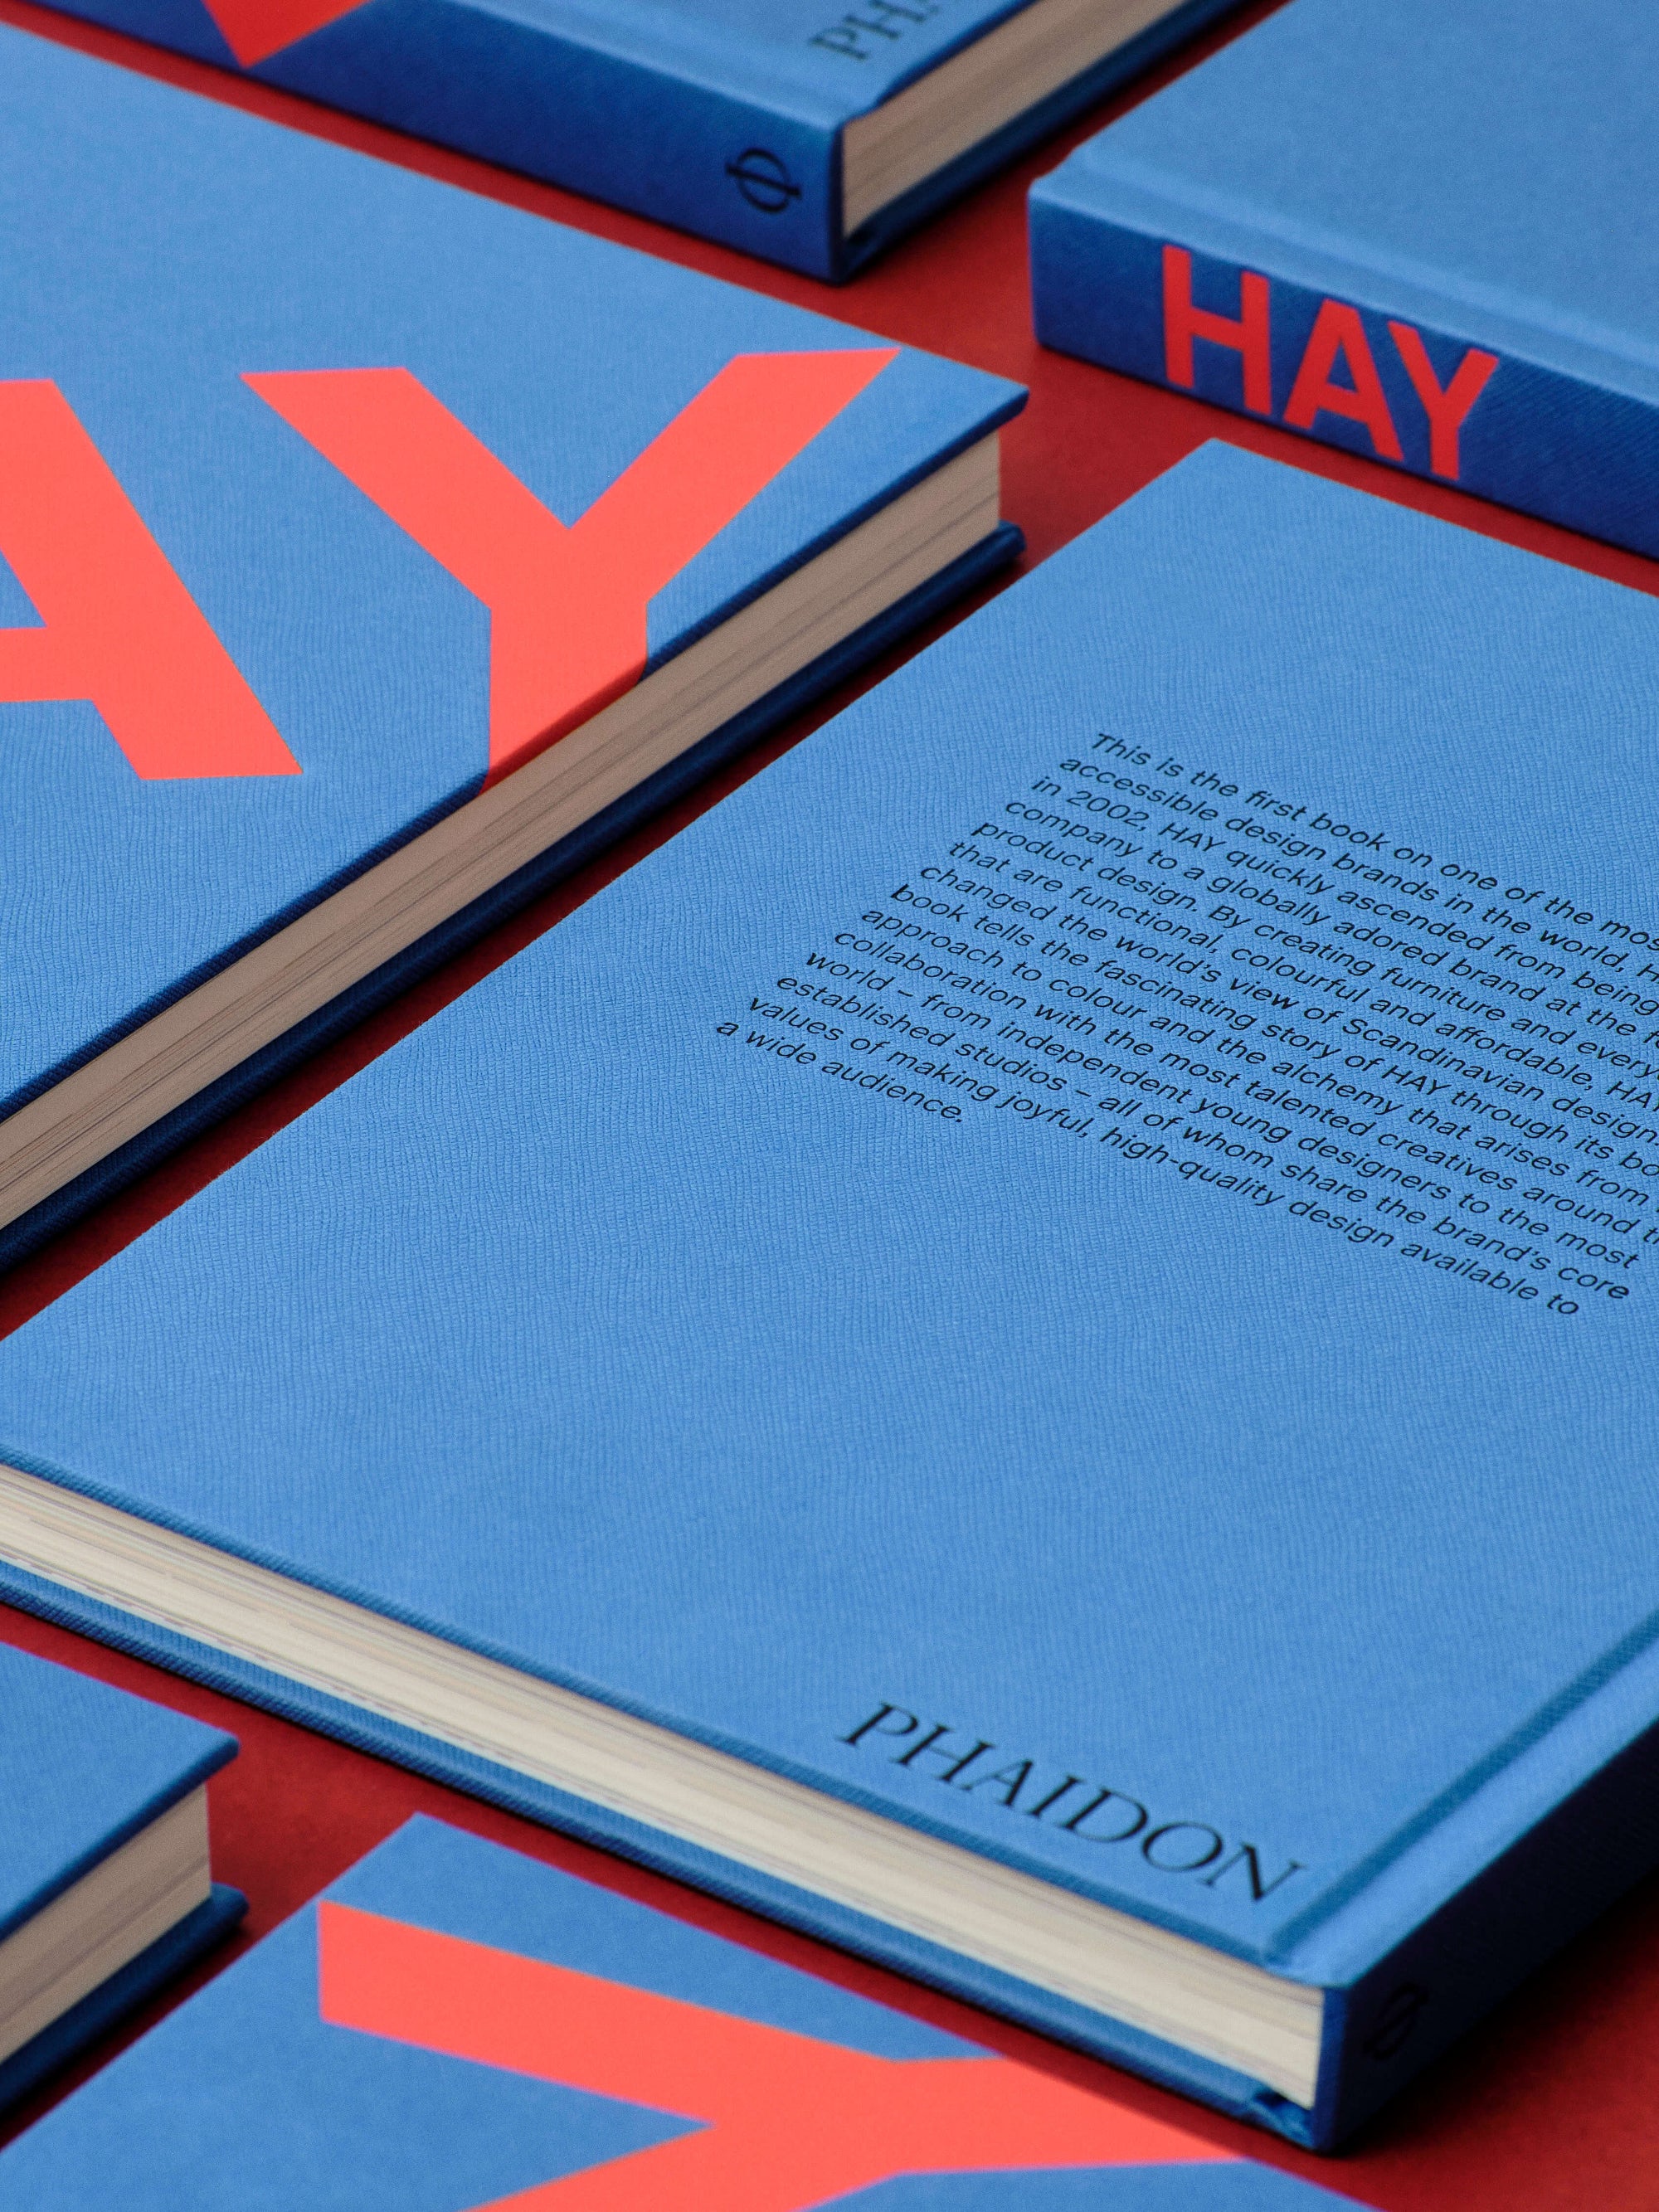 HAY Phaidon Book | by HAY - Lifestory - HAY